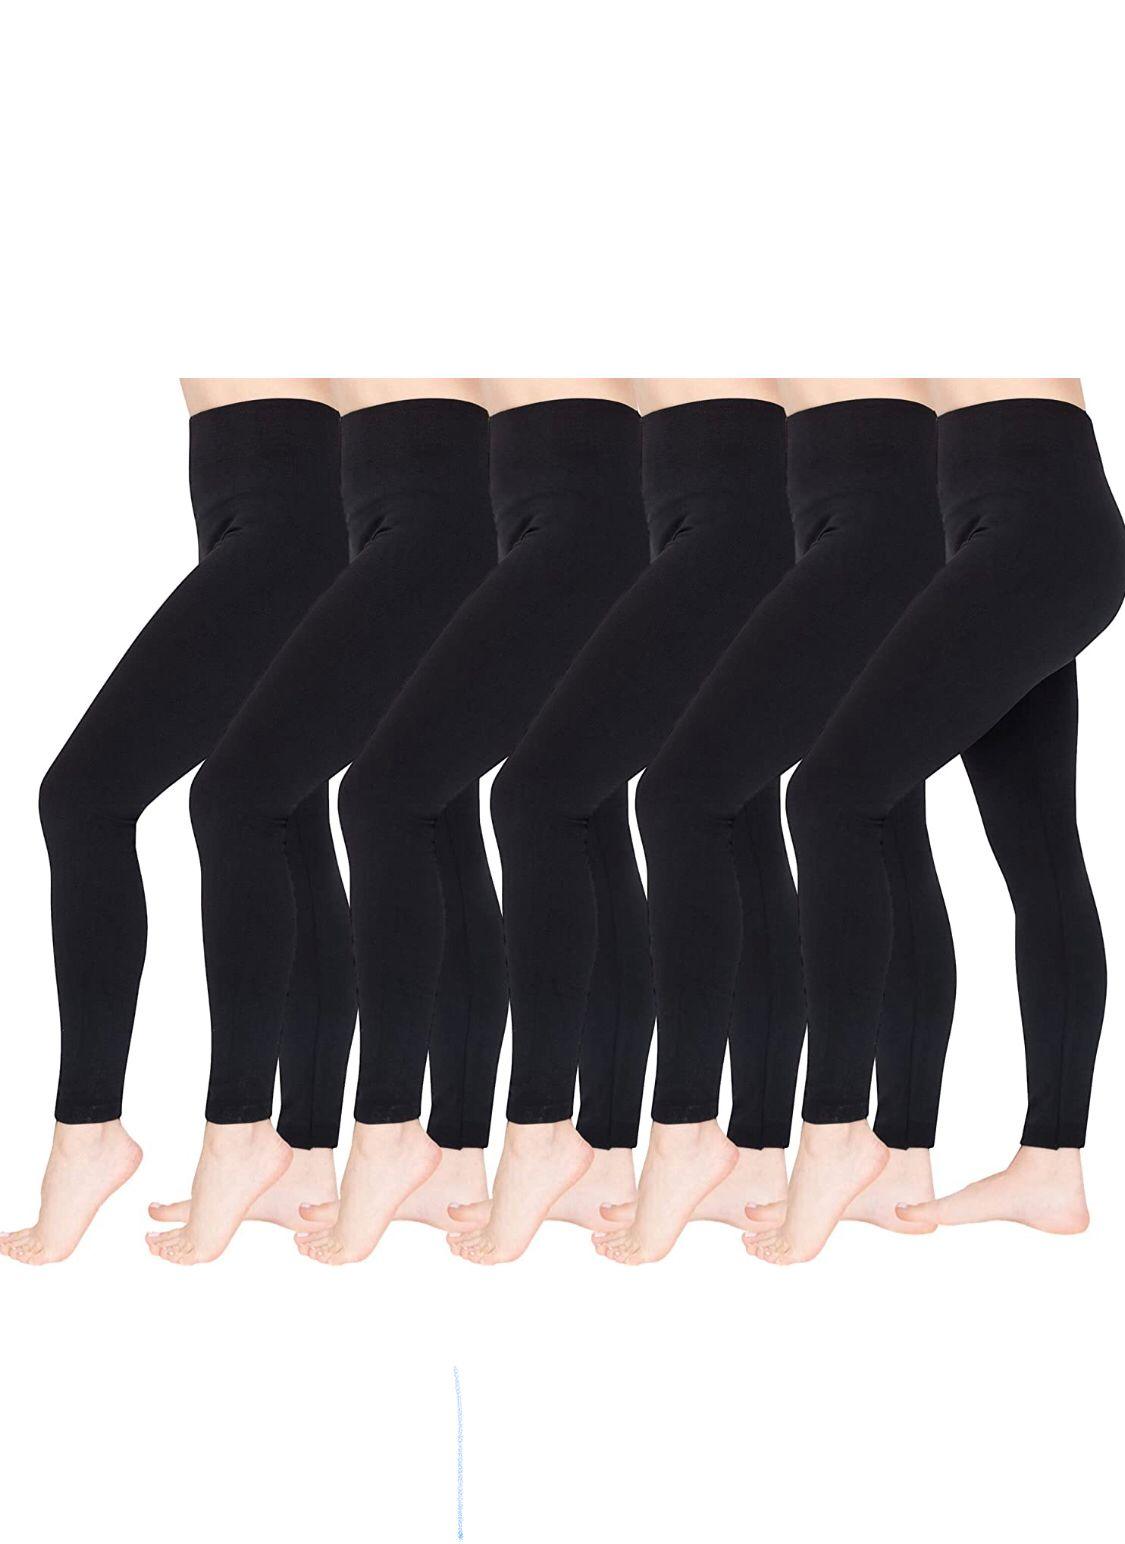 6 Pack Women‚Äôs Fleece Lined Leggings High Waist Stretchy warm Leggings  one size